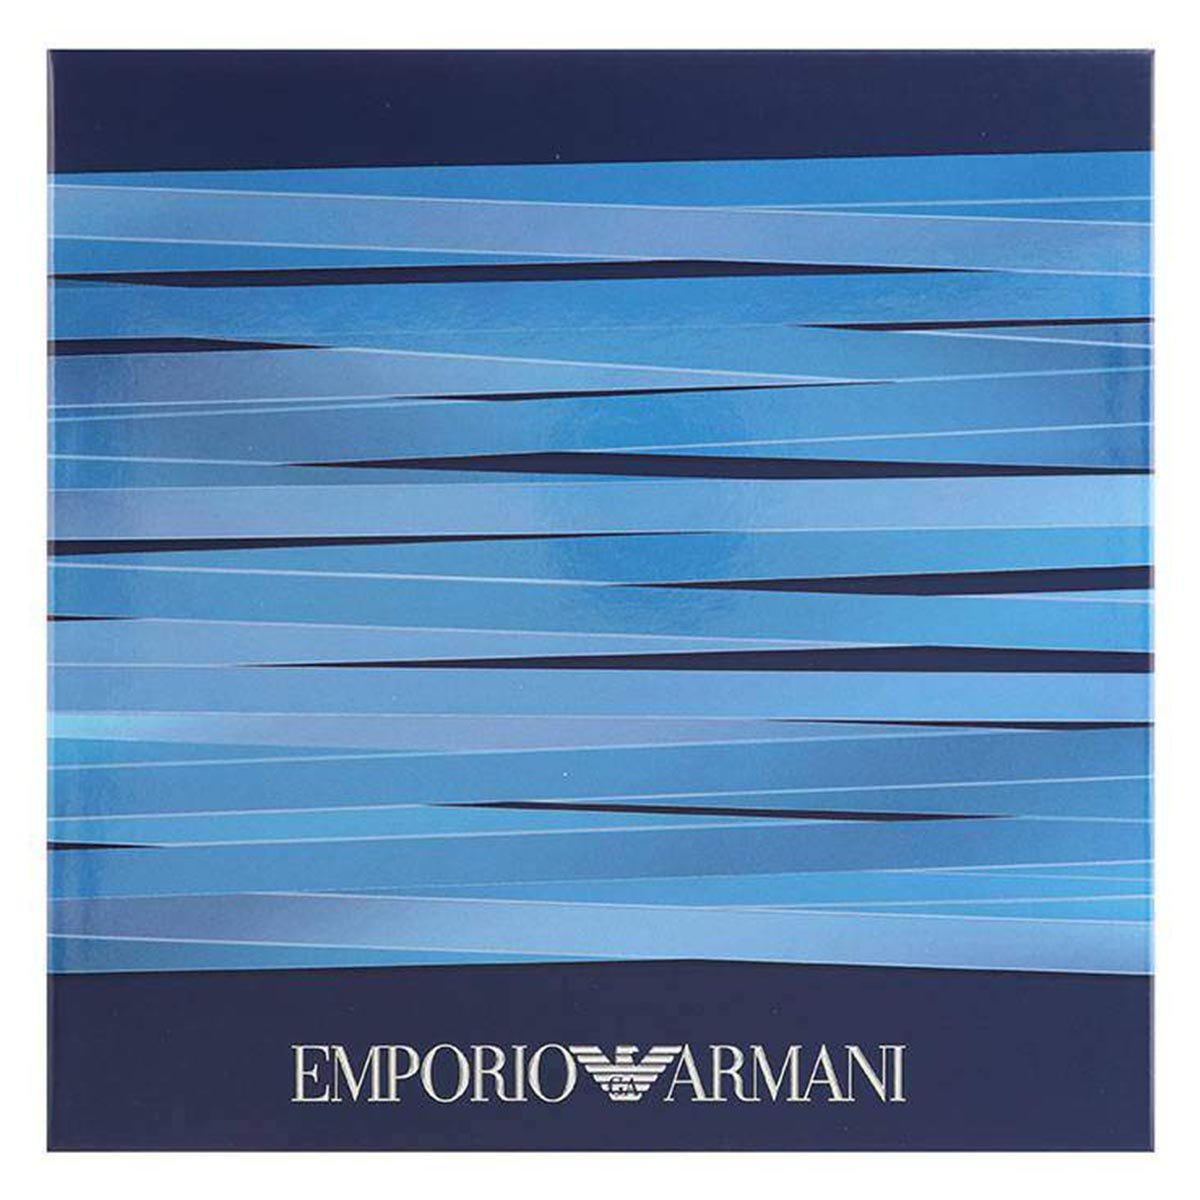 Giorgio Armani Stronger With You Intensely EDP Gift Set - My Perfume Shop Australia